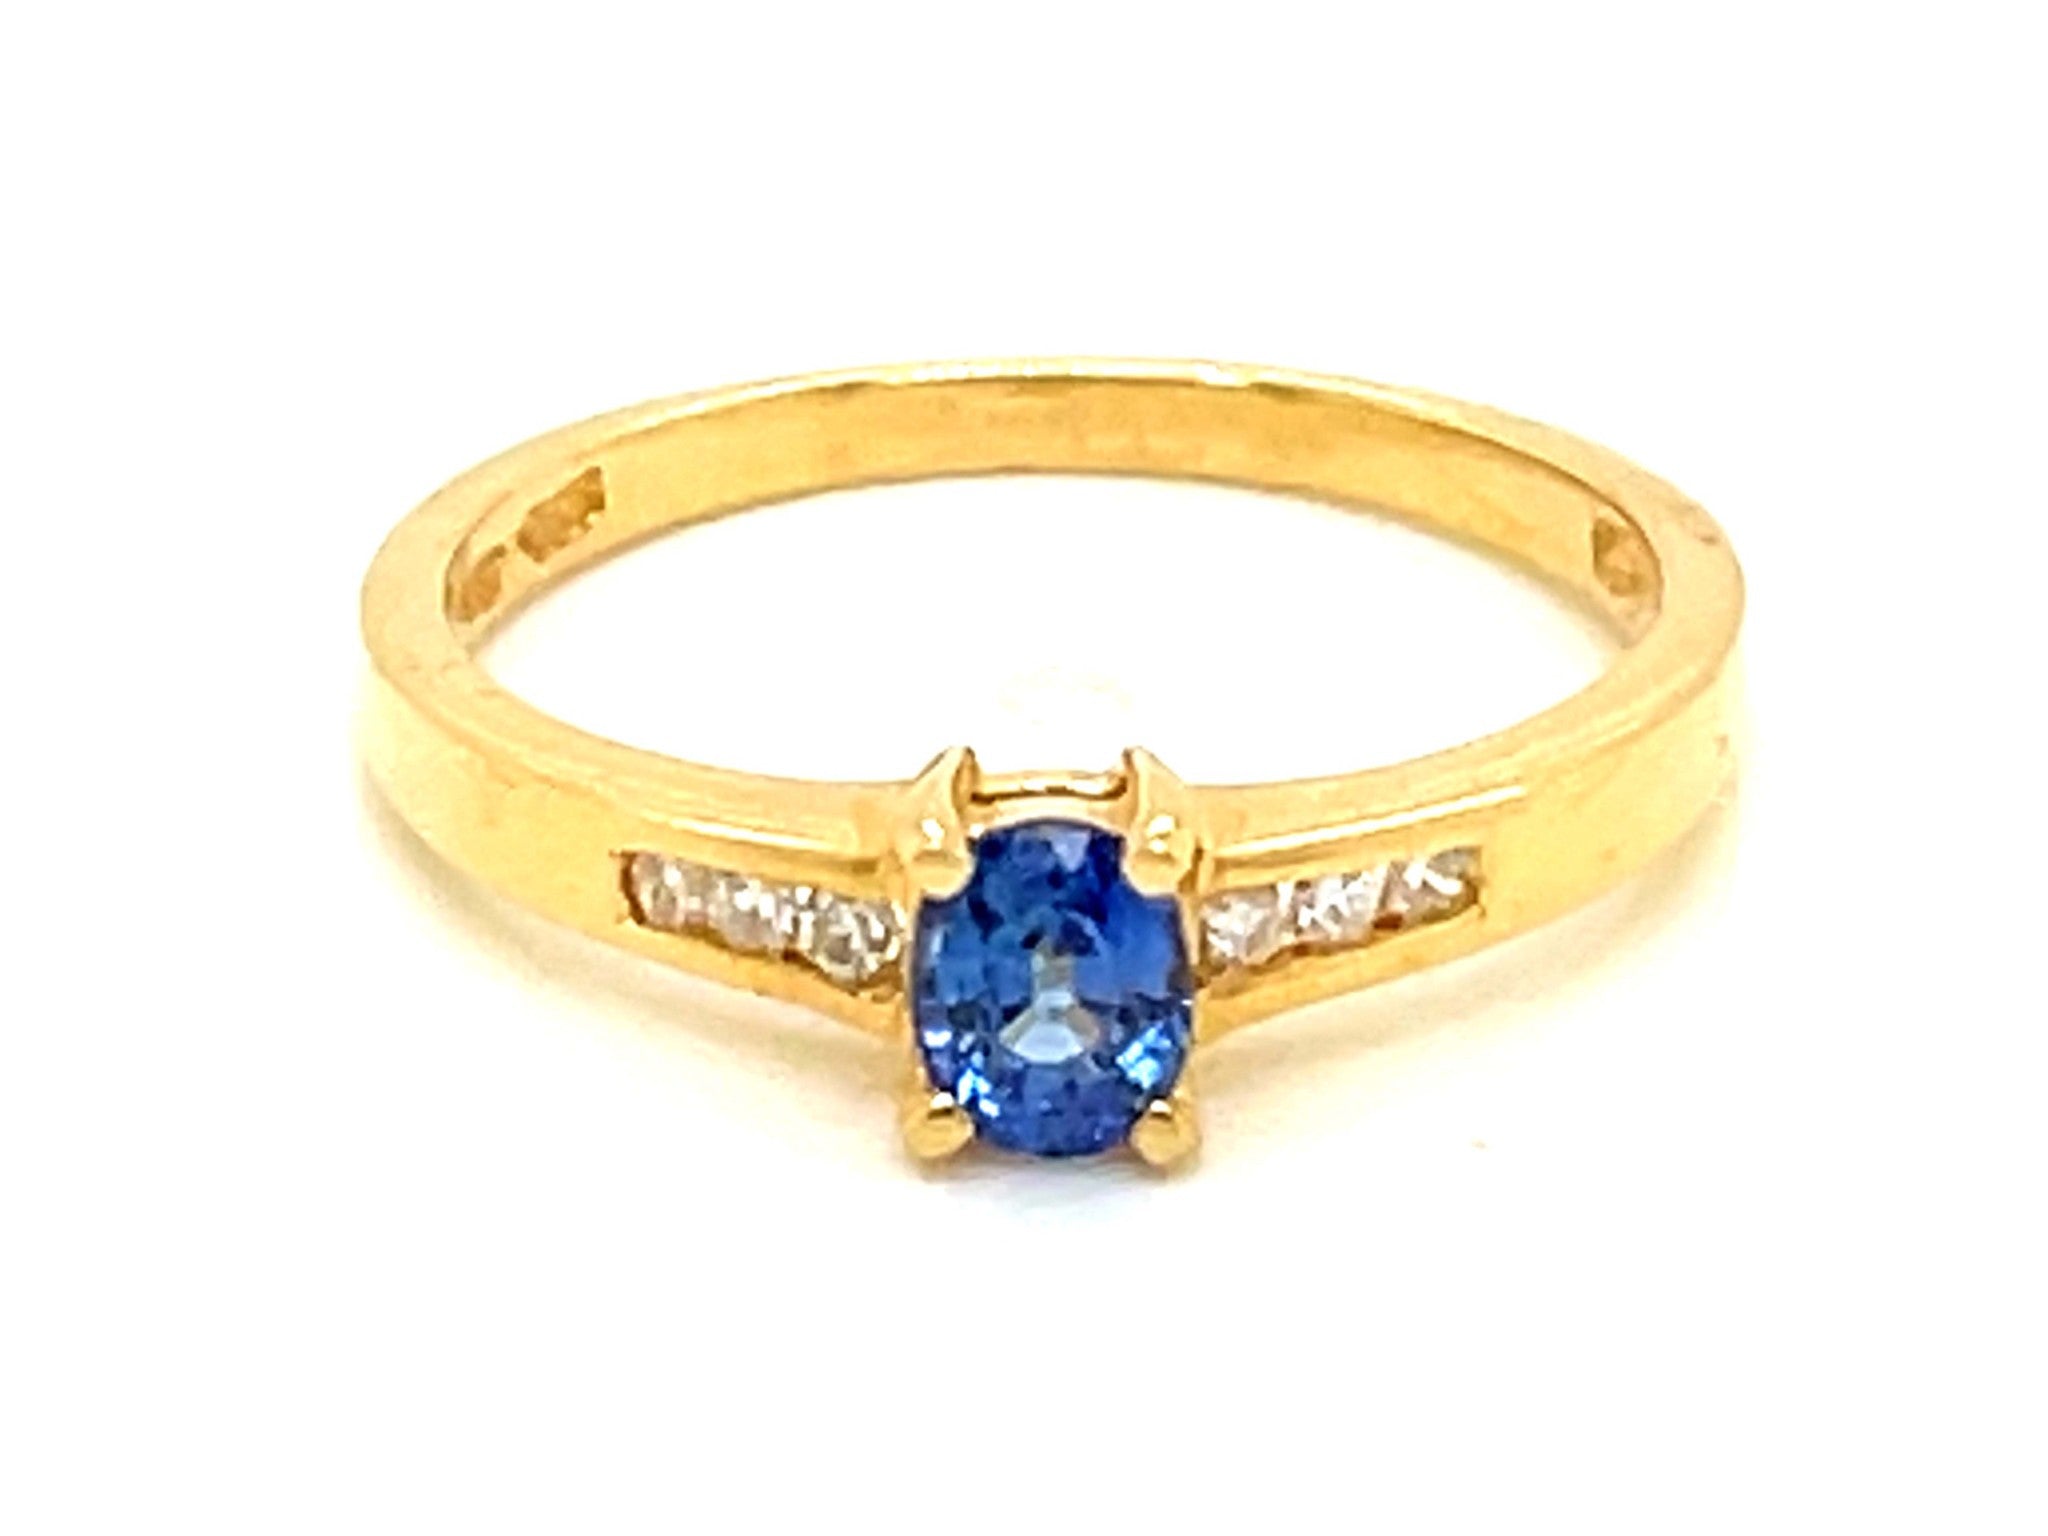 Light Vibrant Blue Sapphire Channel Set Diamond Ring in 14k Yellow Gold